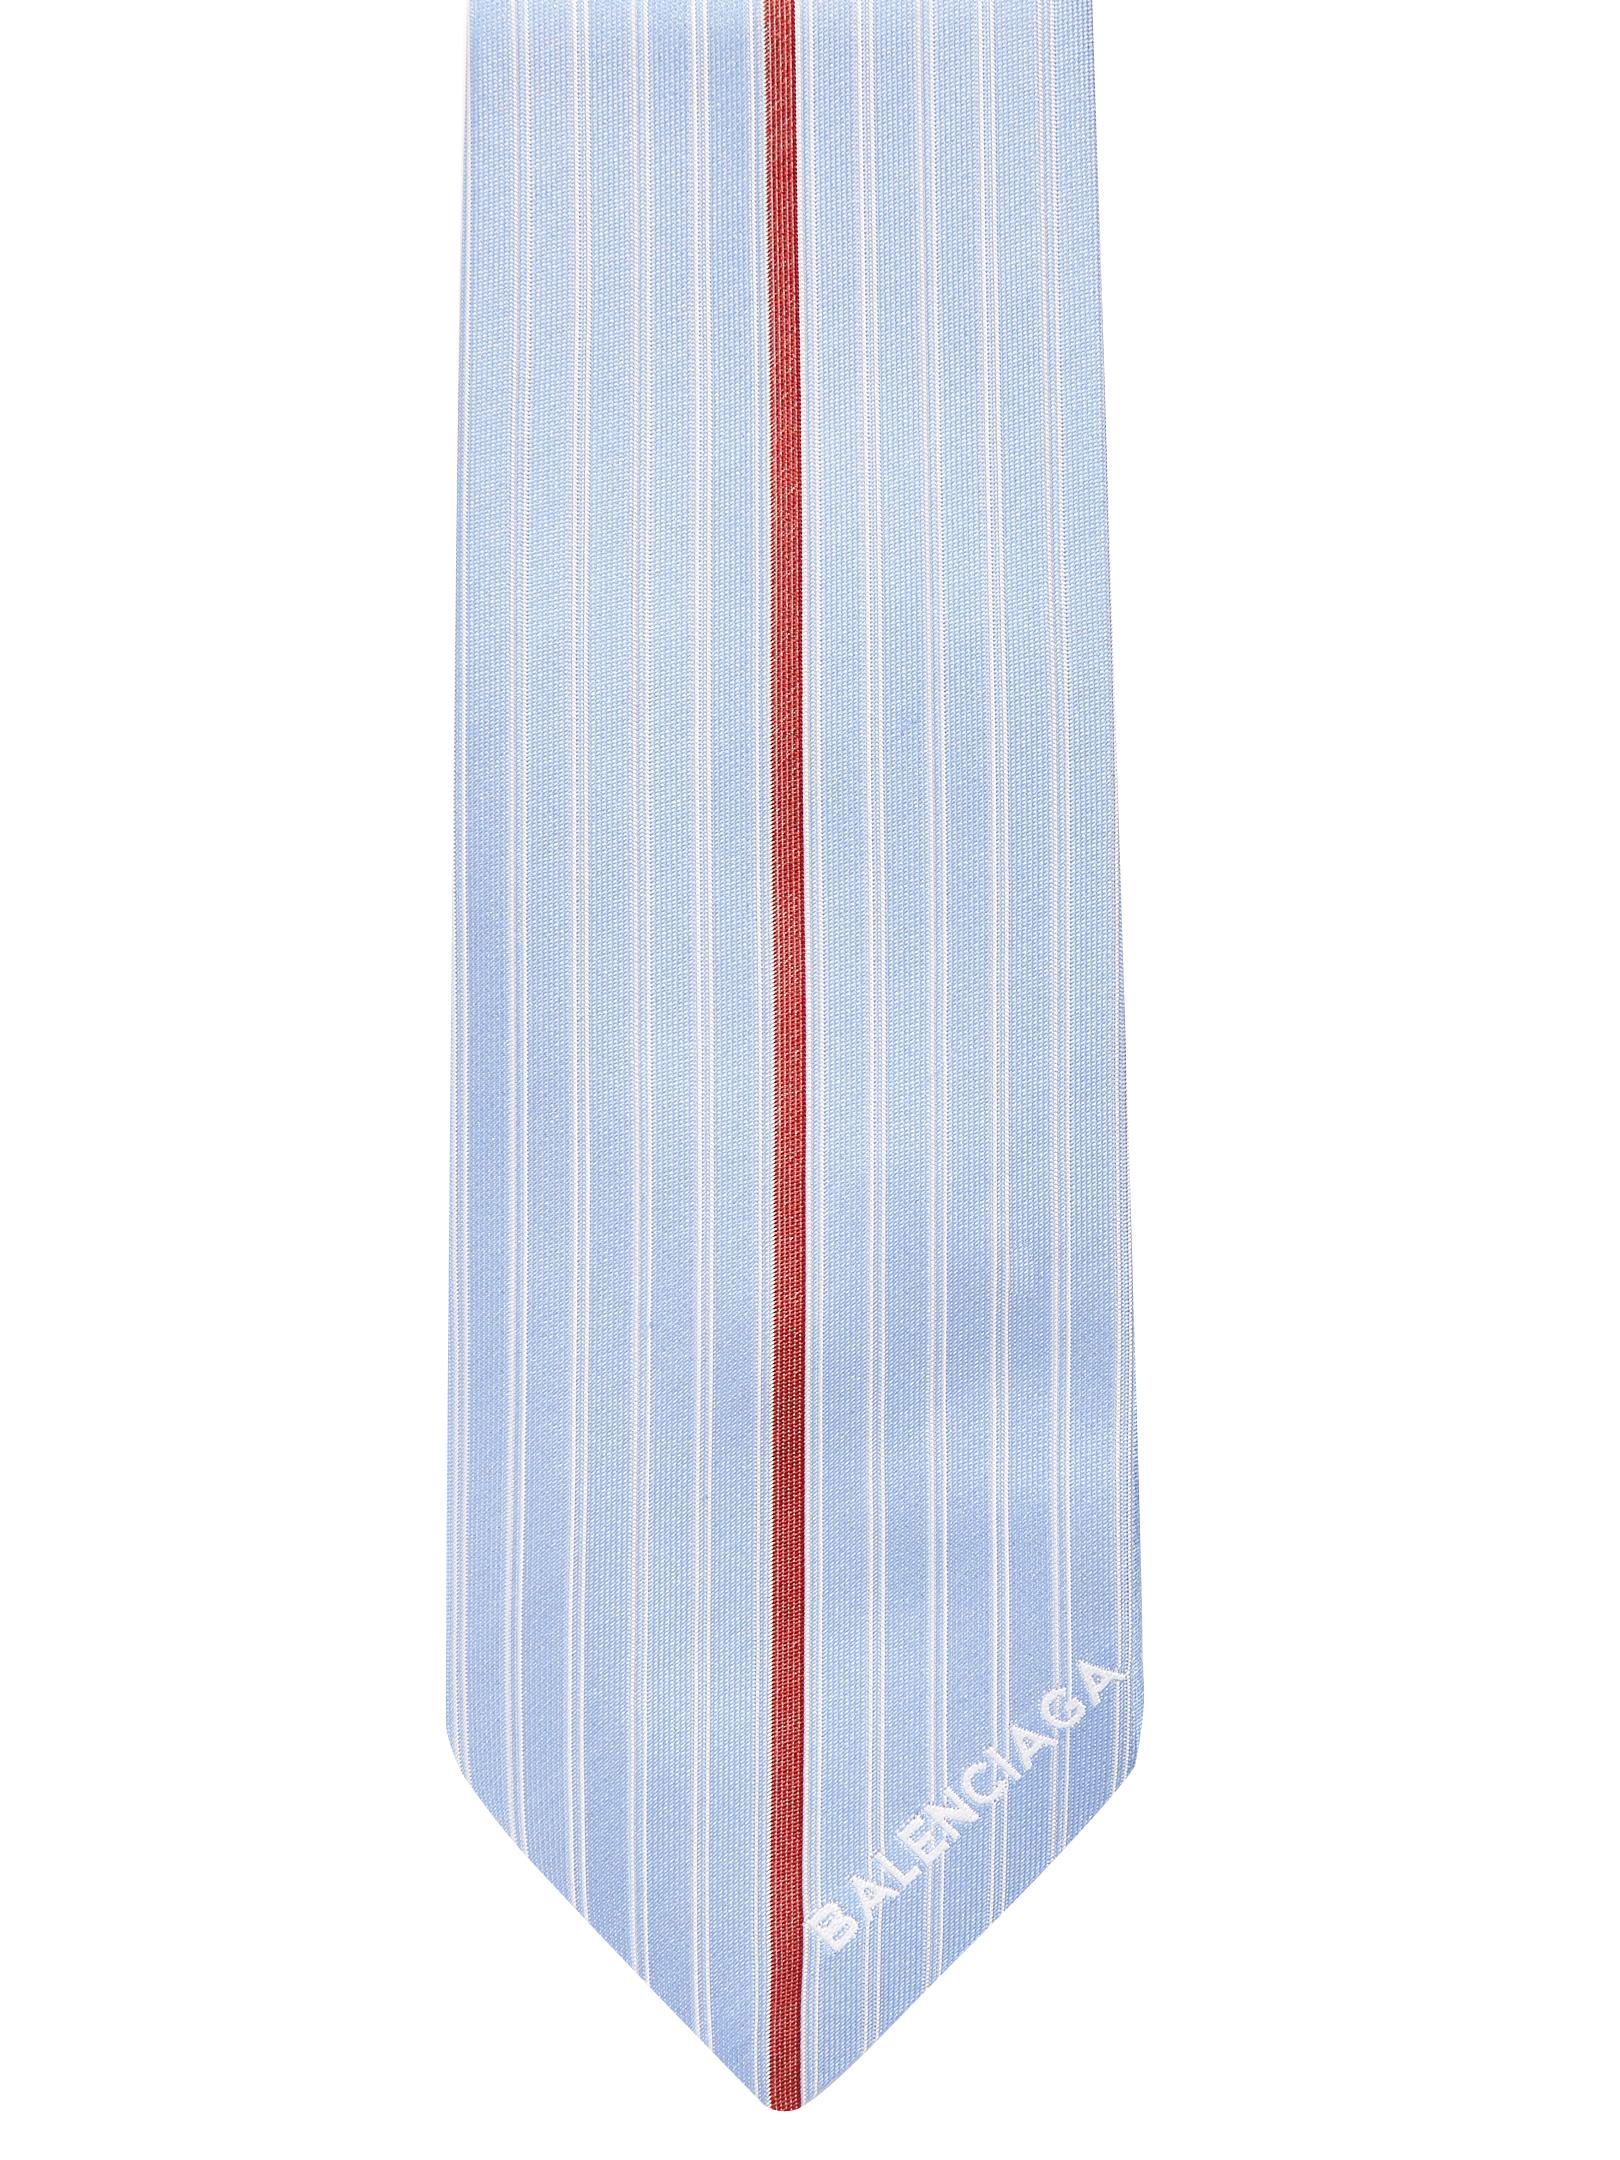 Balenciaga Logo-embroidered Striped Silk Tie in Blue for Men - Lyst